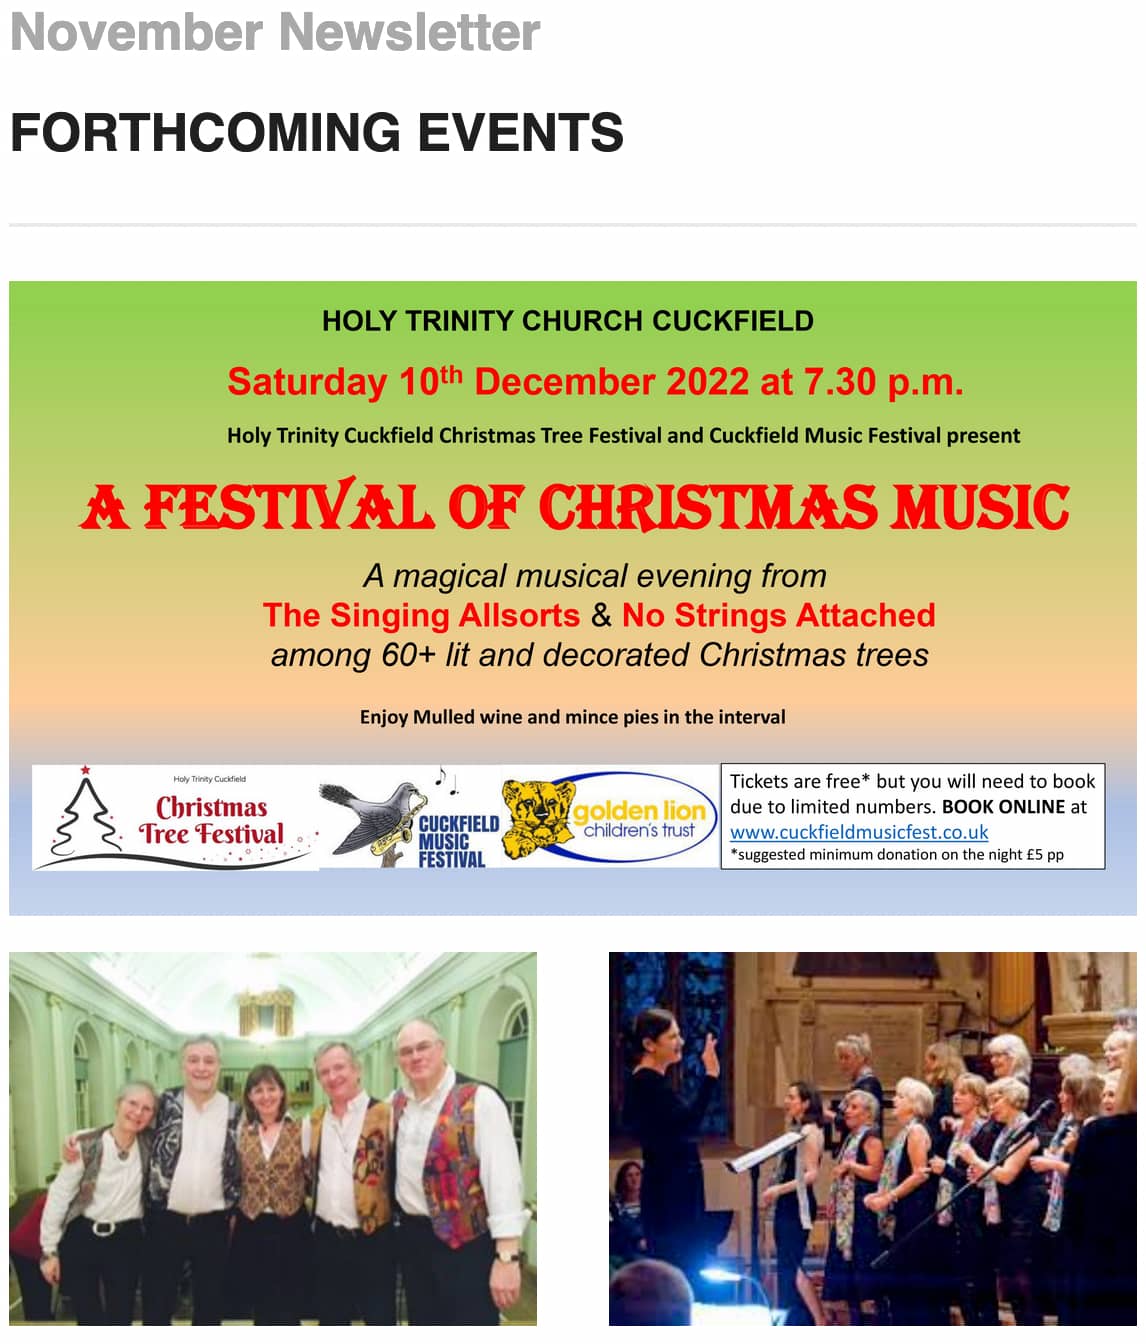 Cuckfield Christmas Music Event